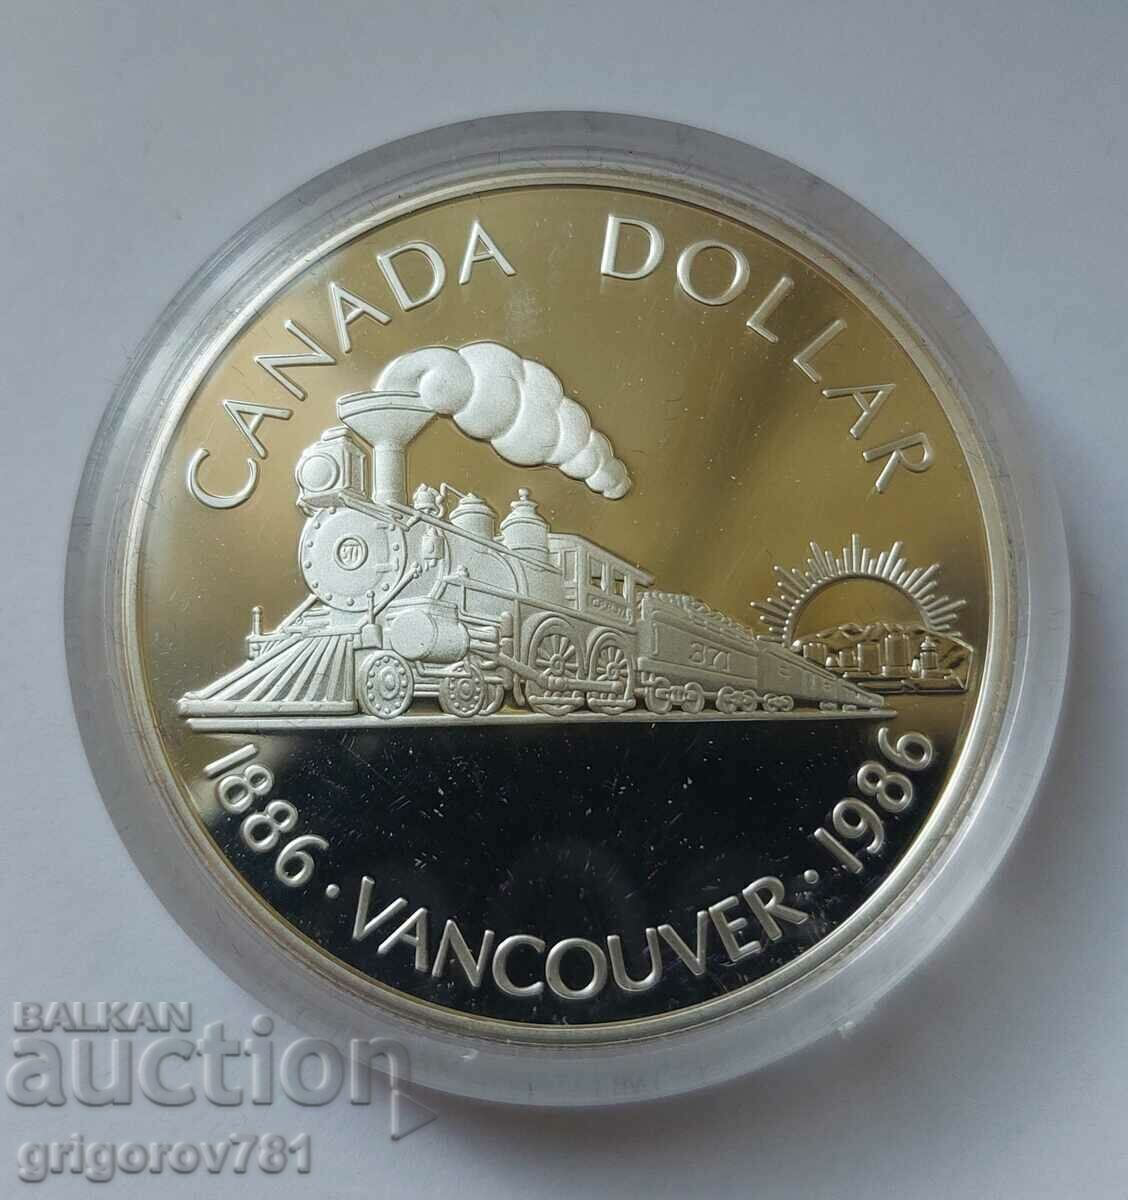 1 Dollar Silver Canada 1986 Proof - Silver Coin